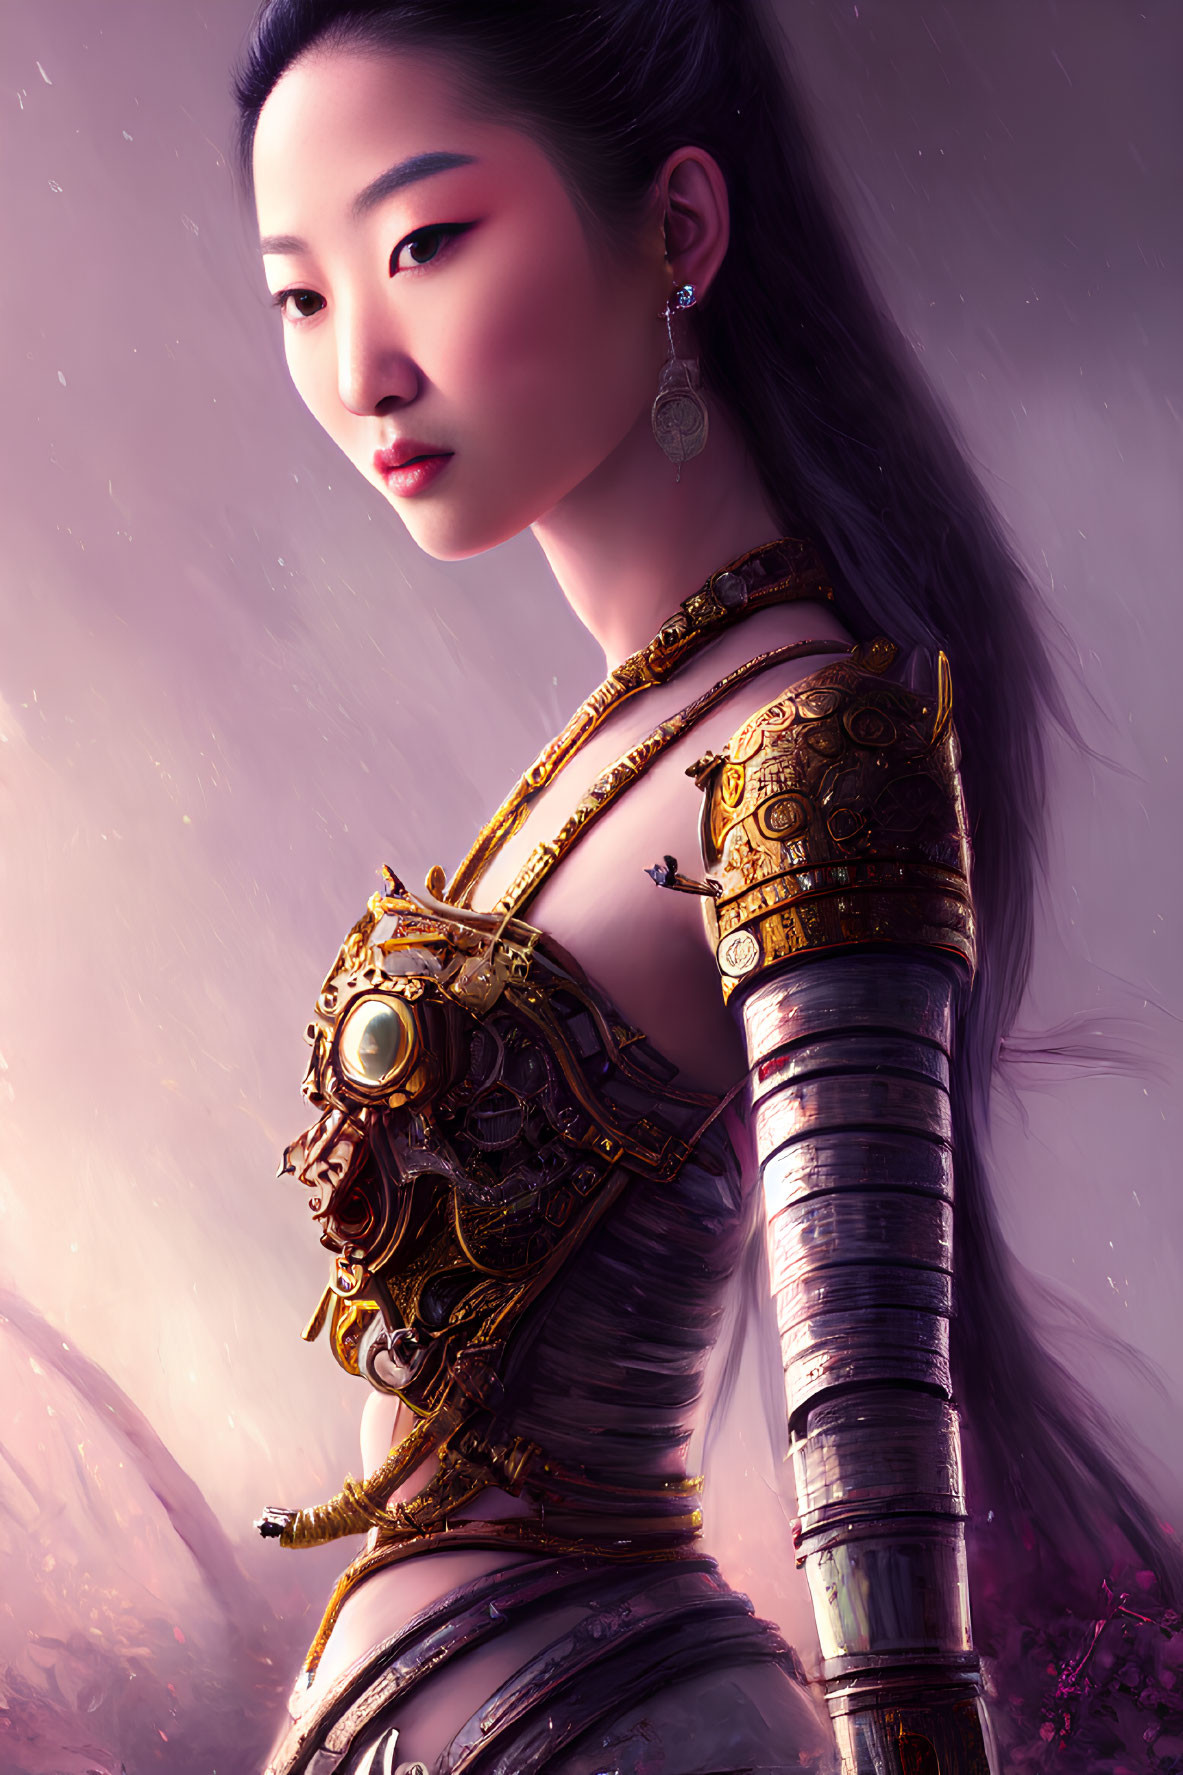 Digital artwork: East Asian woman in fantasy armor against misty purple background